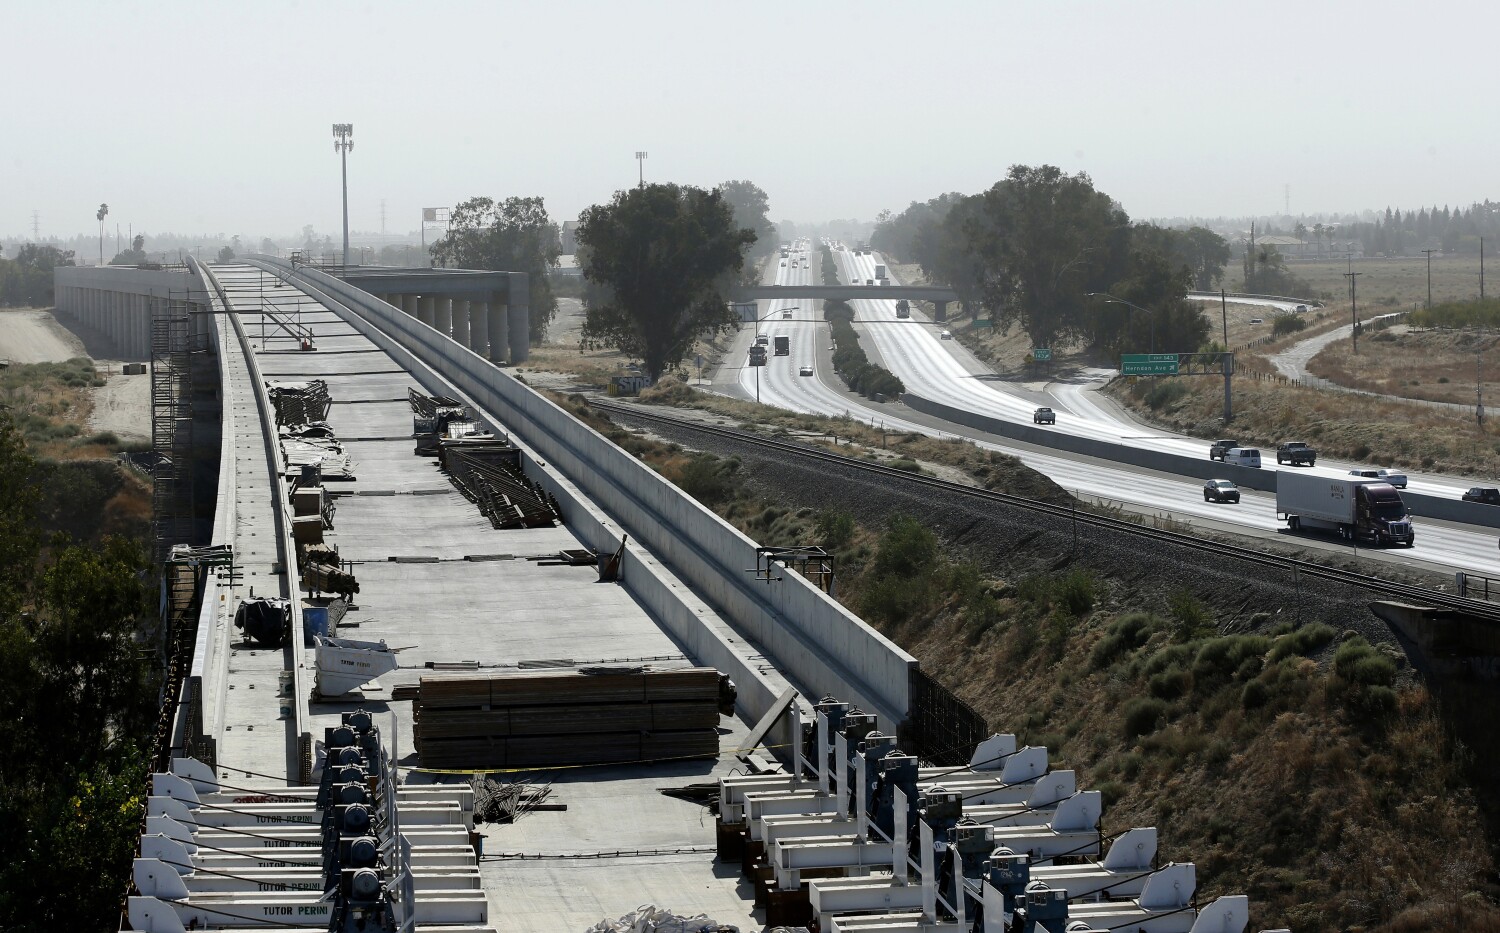 Cost overruns hit California bullet train again amid a new financial crunch